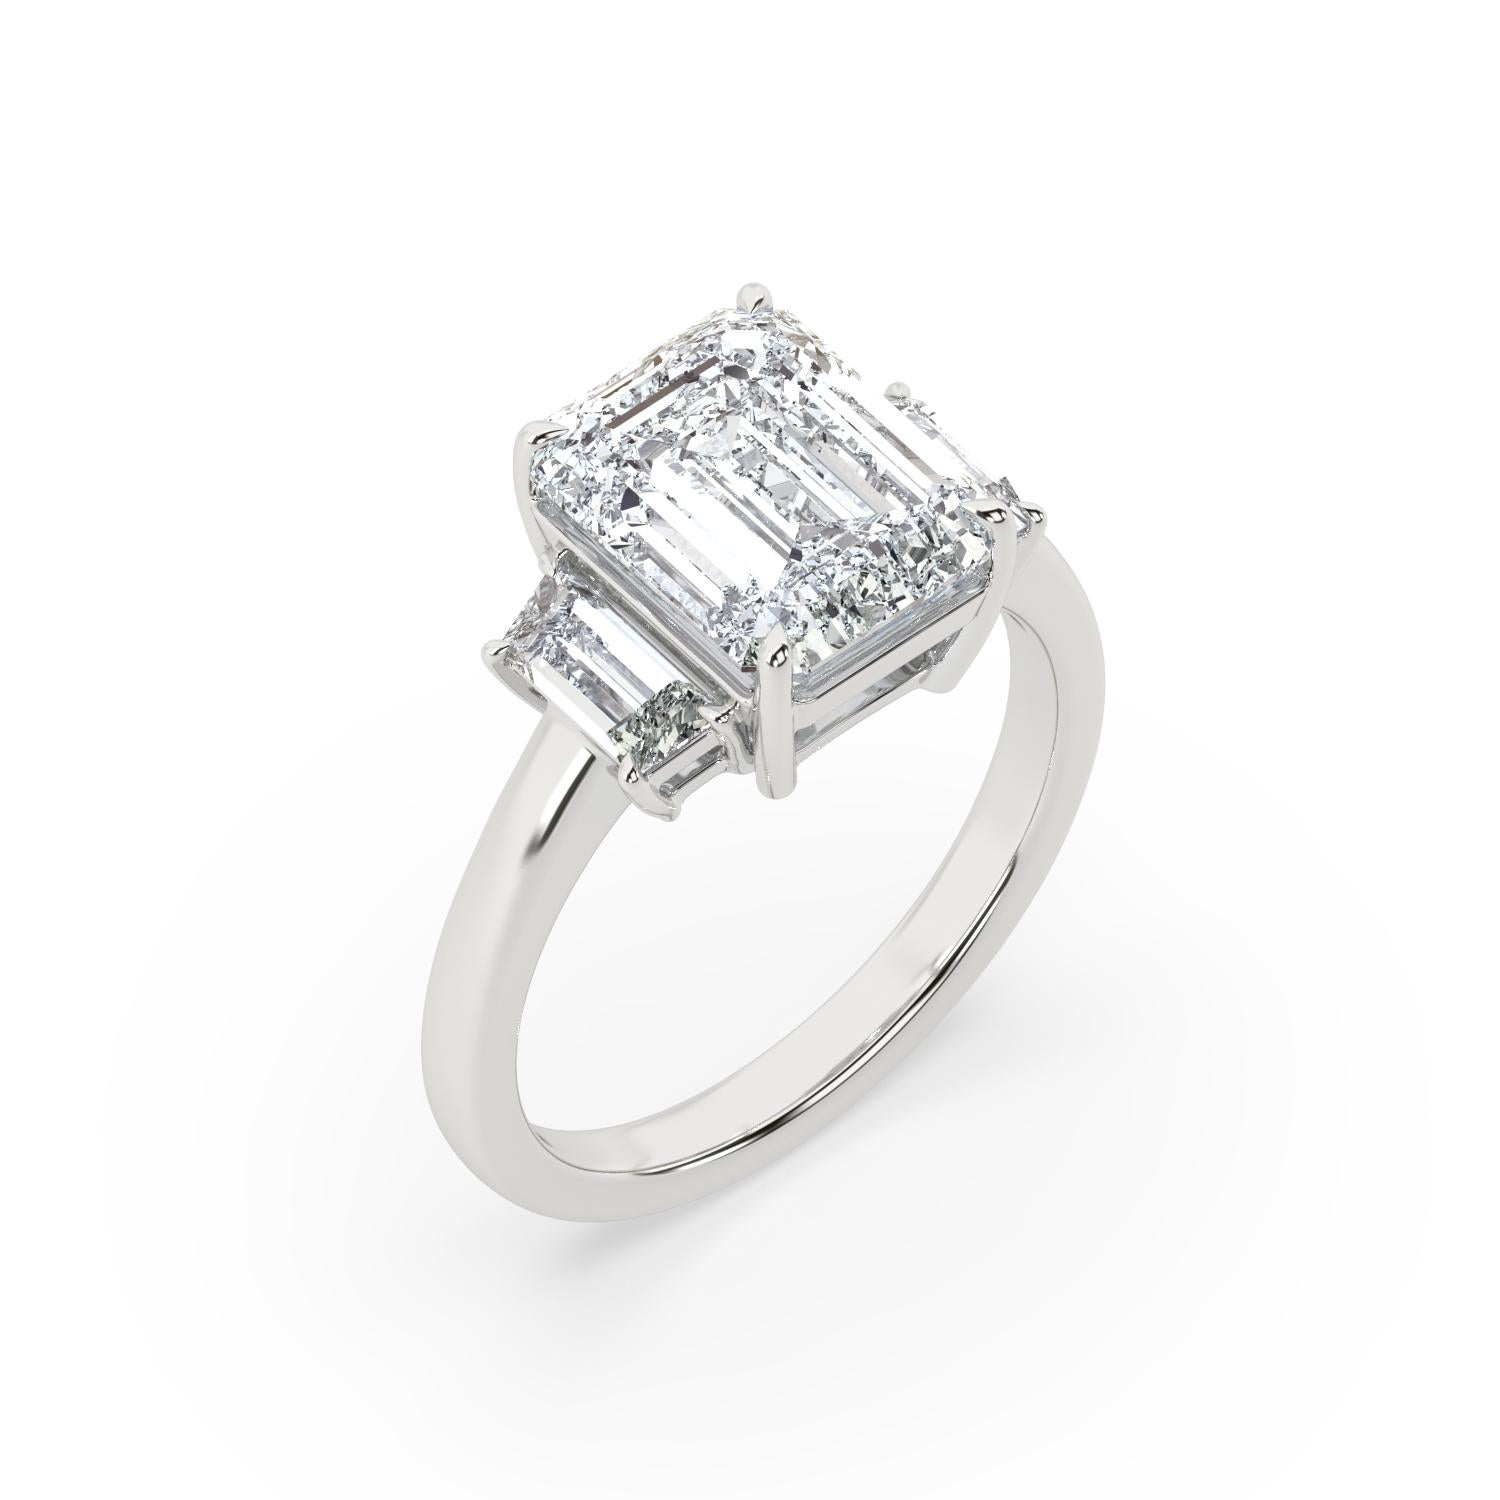 2 ct diamond ring emerald cut